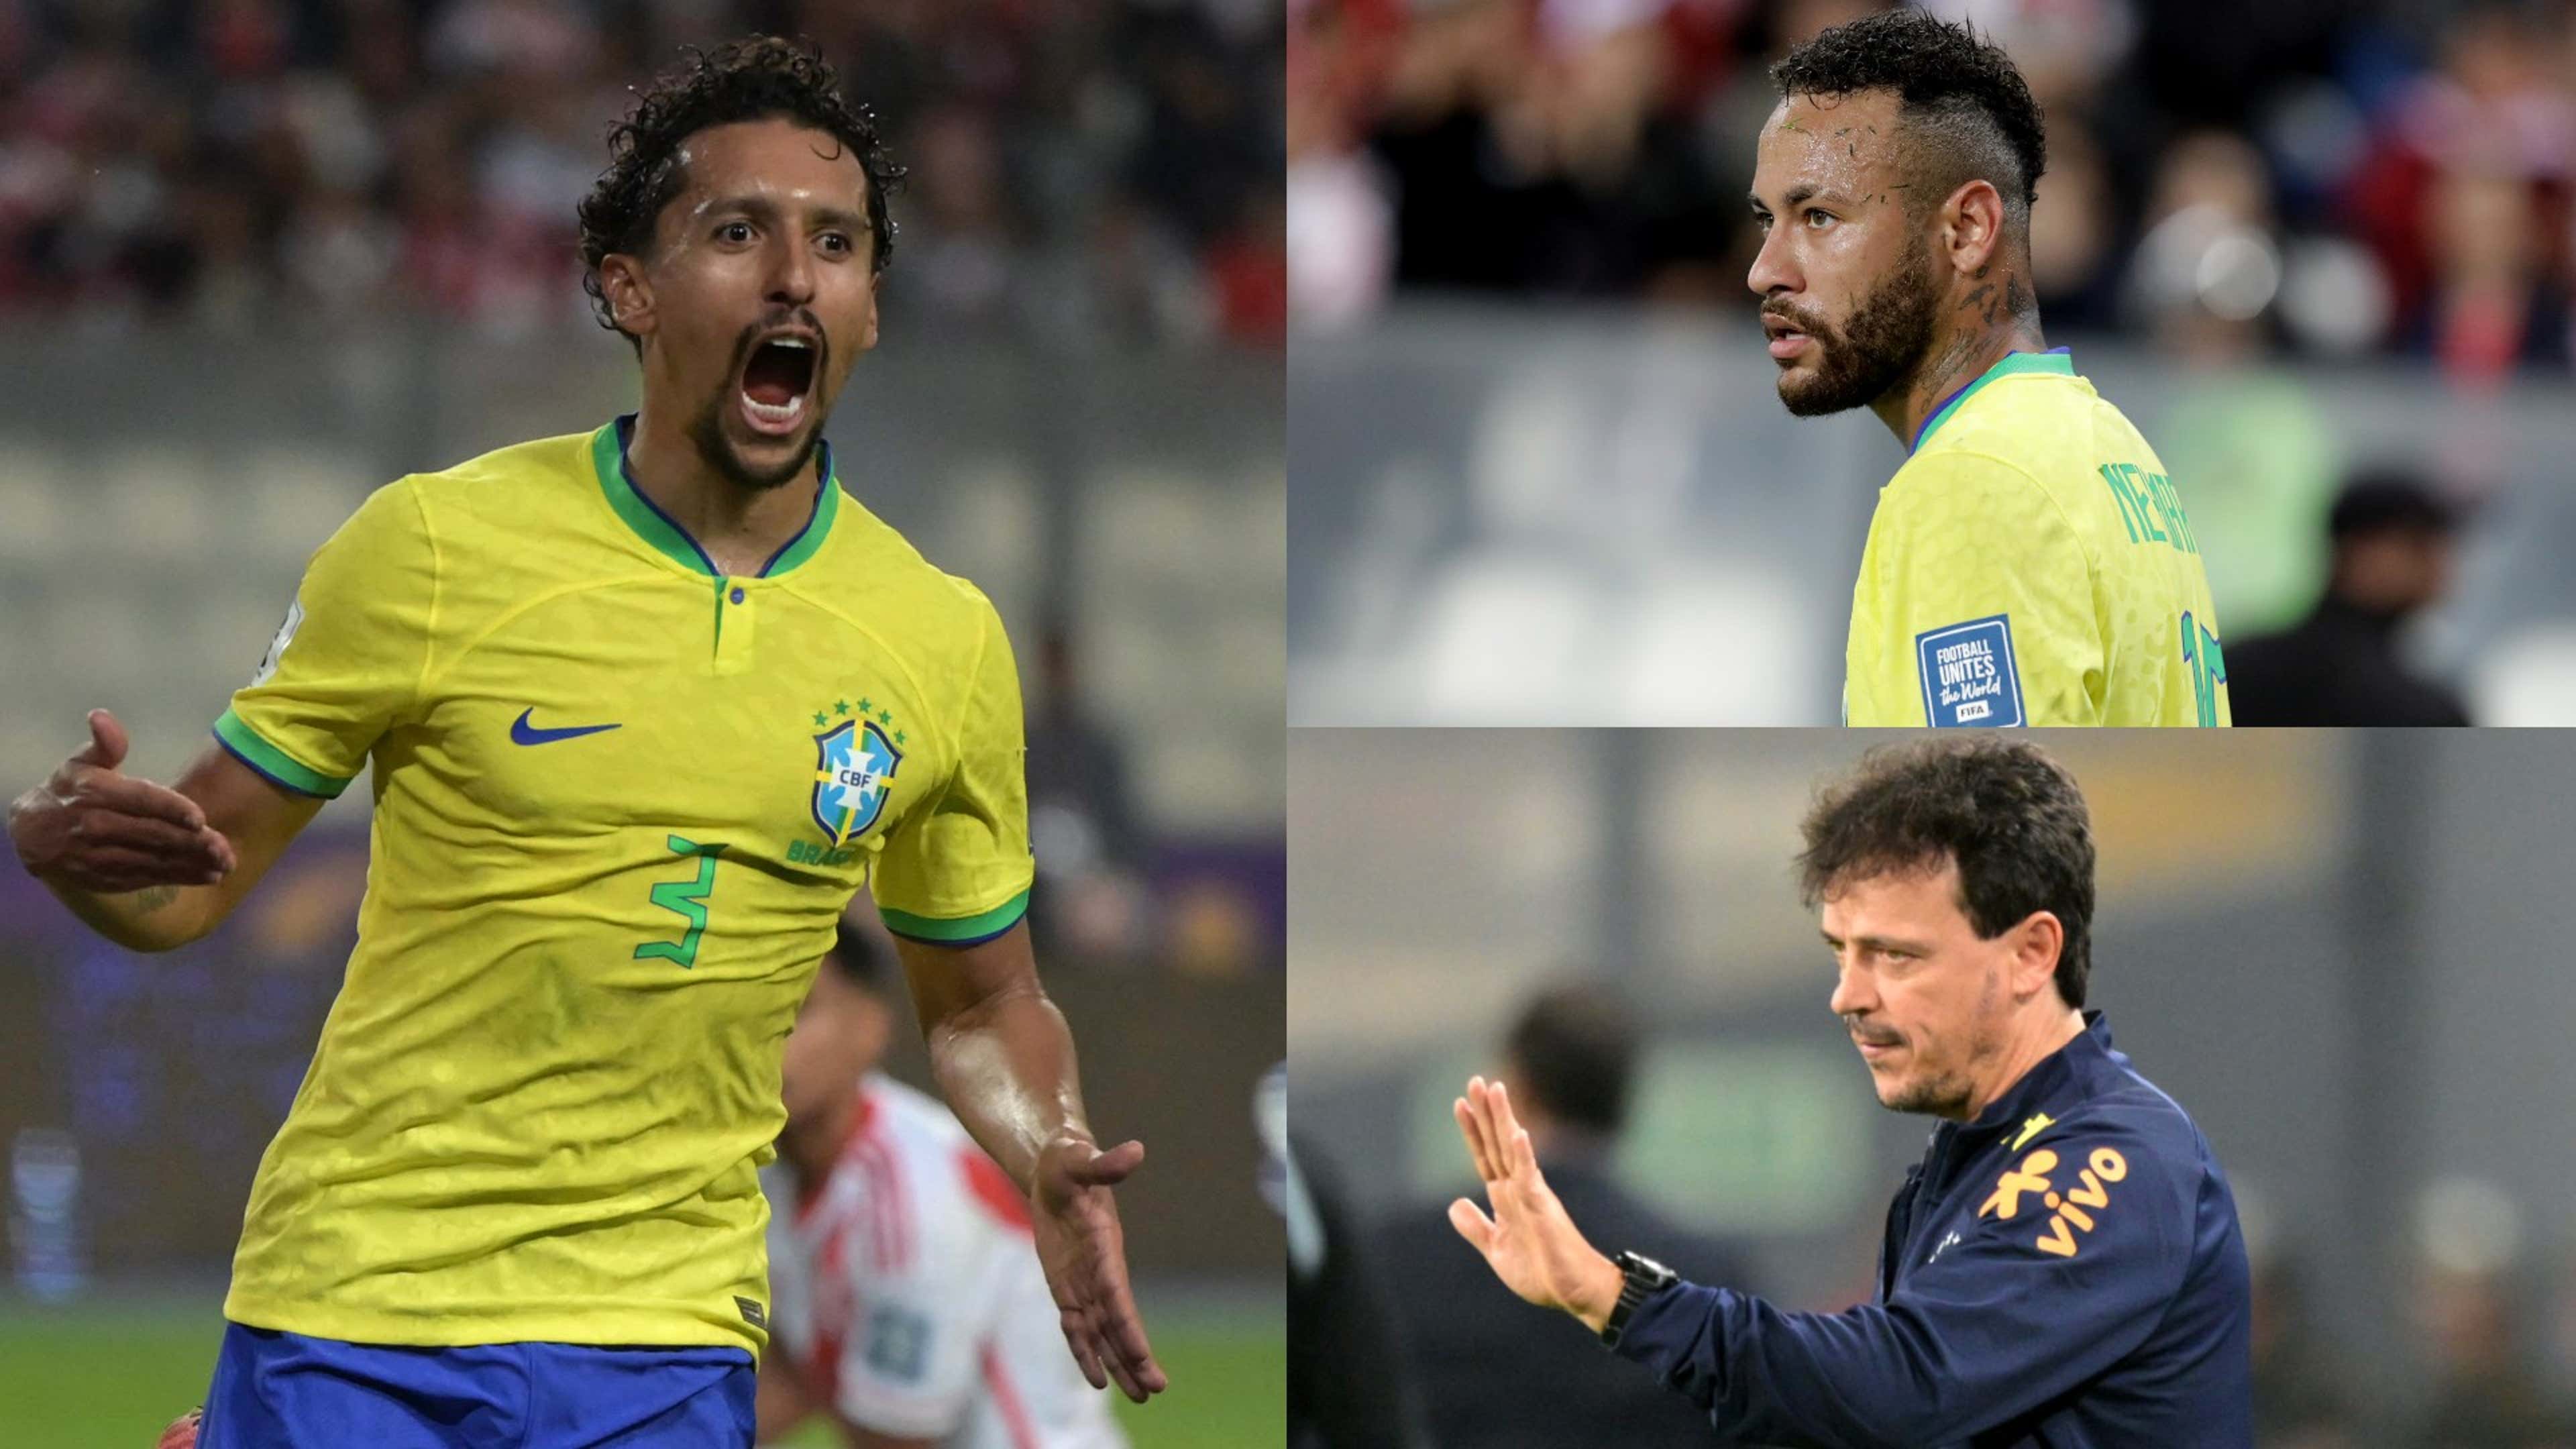 Brazilian Soccer Team's Tragic End to Historic Season - The New York Times